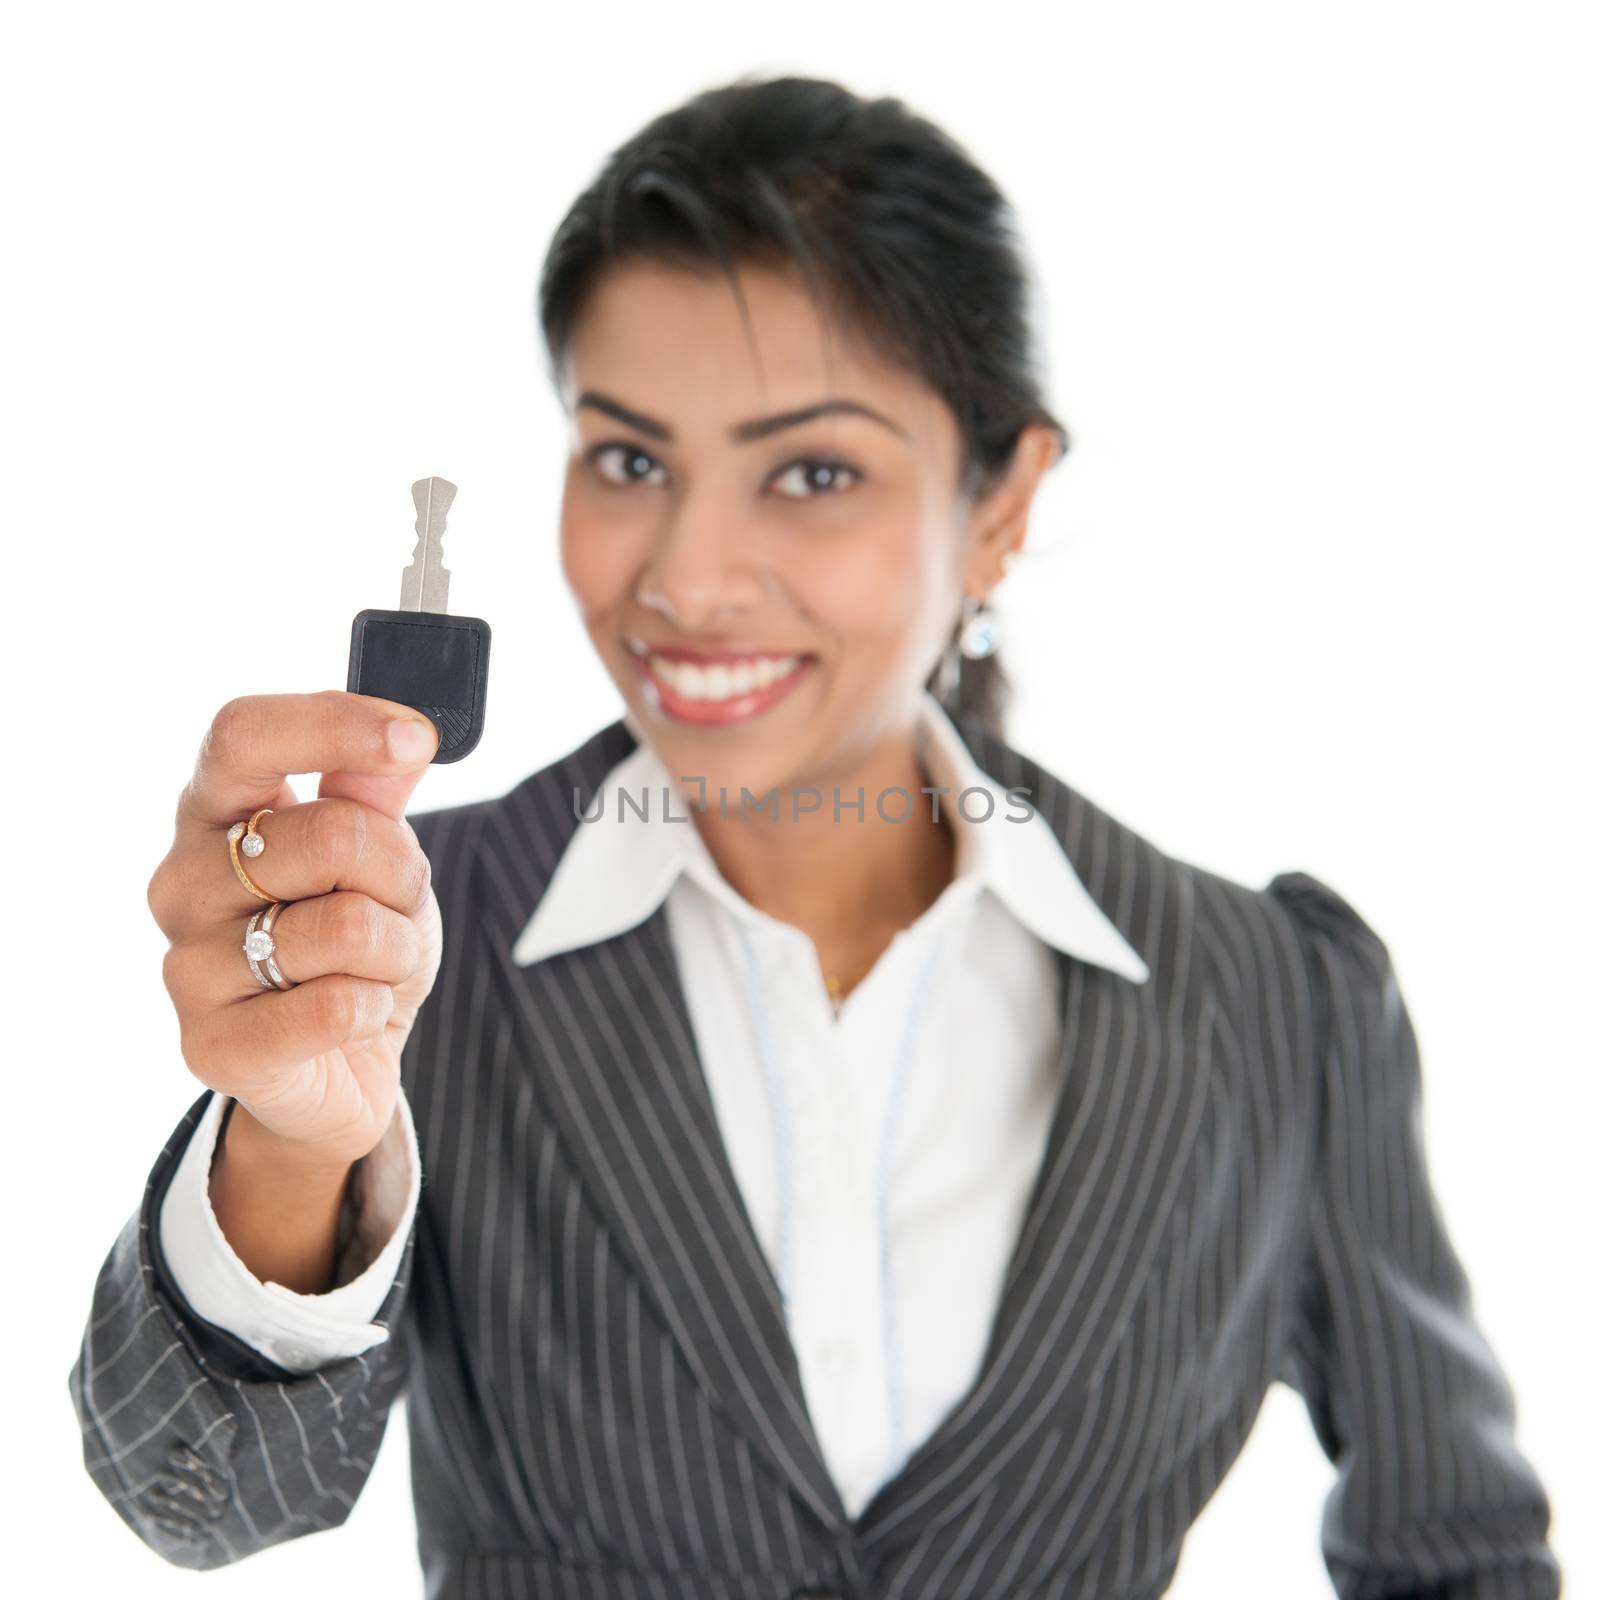 Car dealer hand holding vehicle key and smiling, isolated on white background.